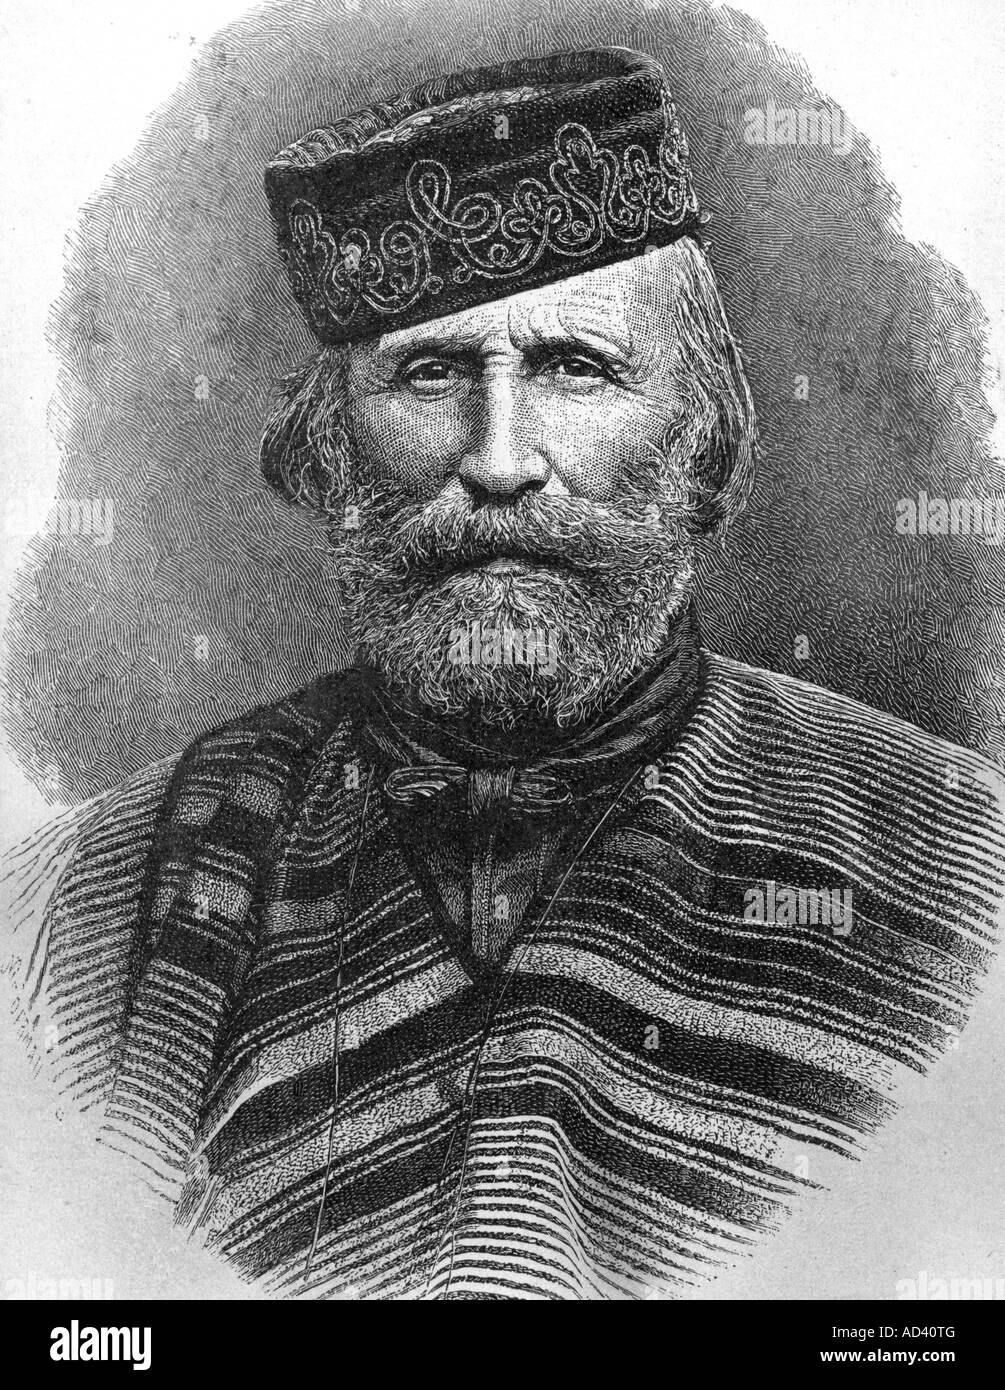 Garibaldi, Giuseppe, 4.7.1807 - 2.6.1882, Italian freedomfighter, portrait, engraving, after photography, 19th century, Stock Photo